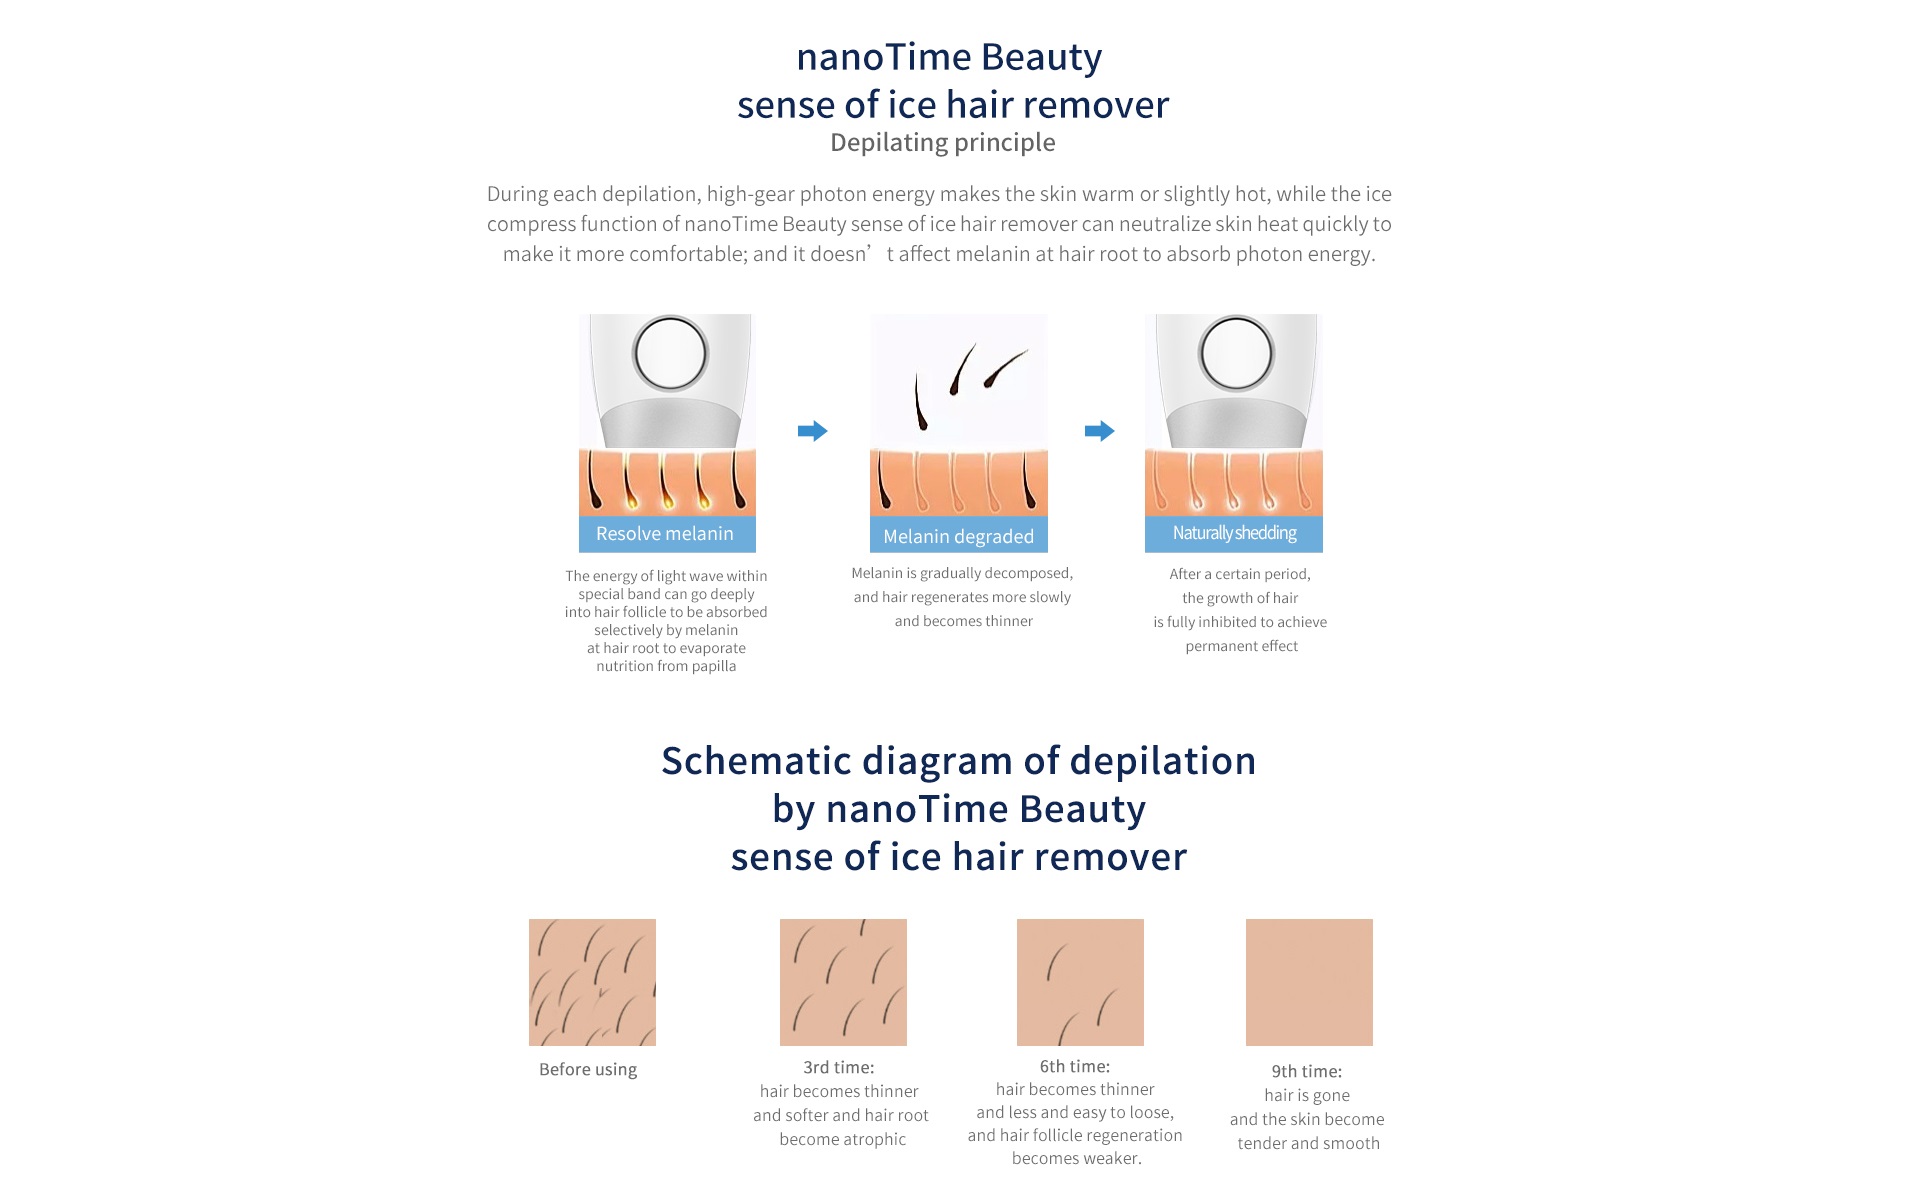 nanotime beauty IPL hair remove devies